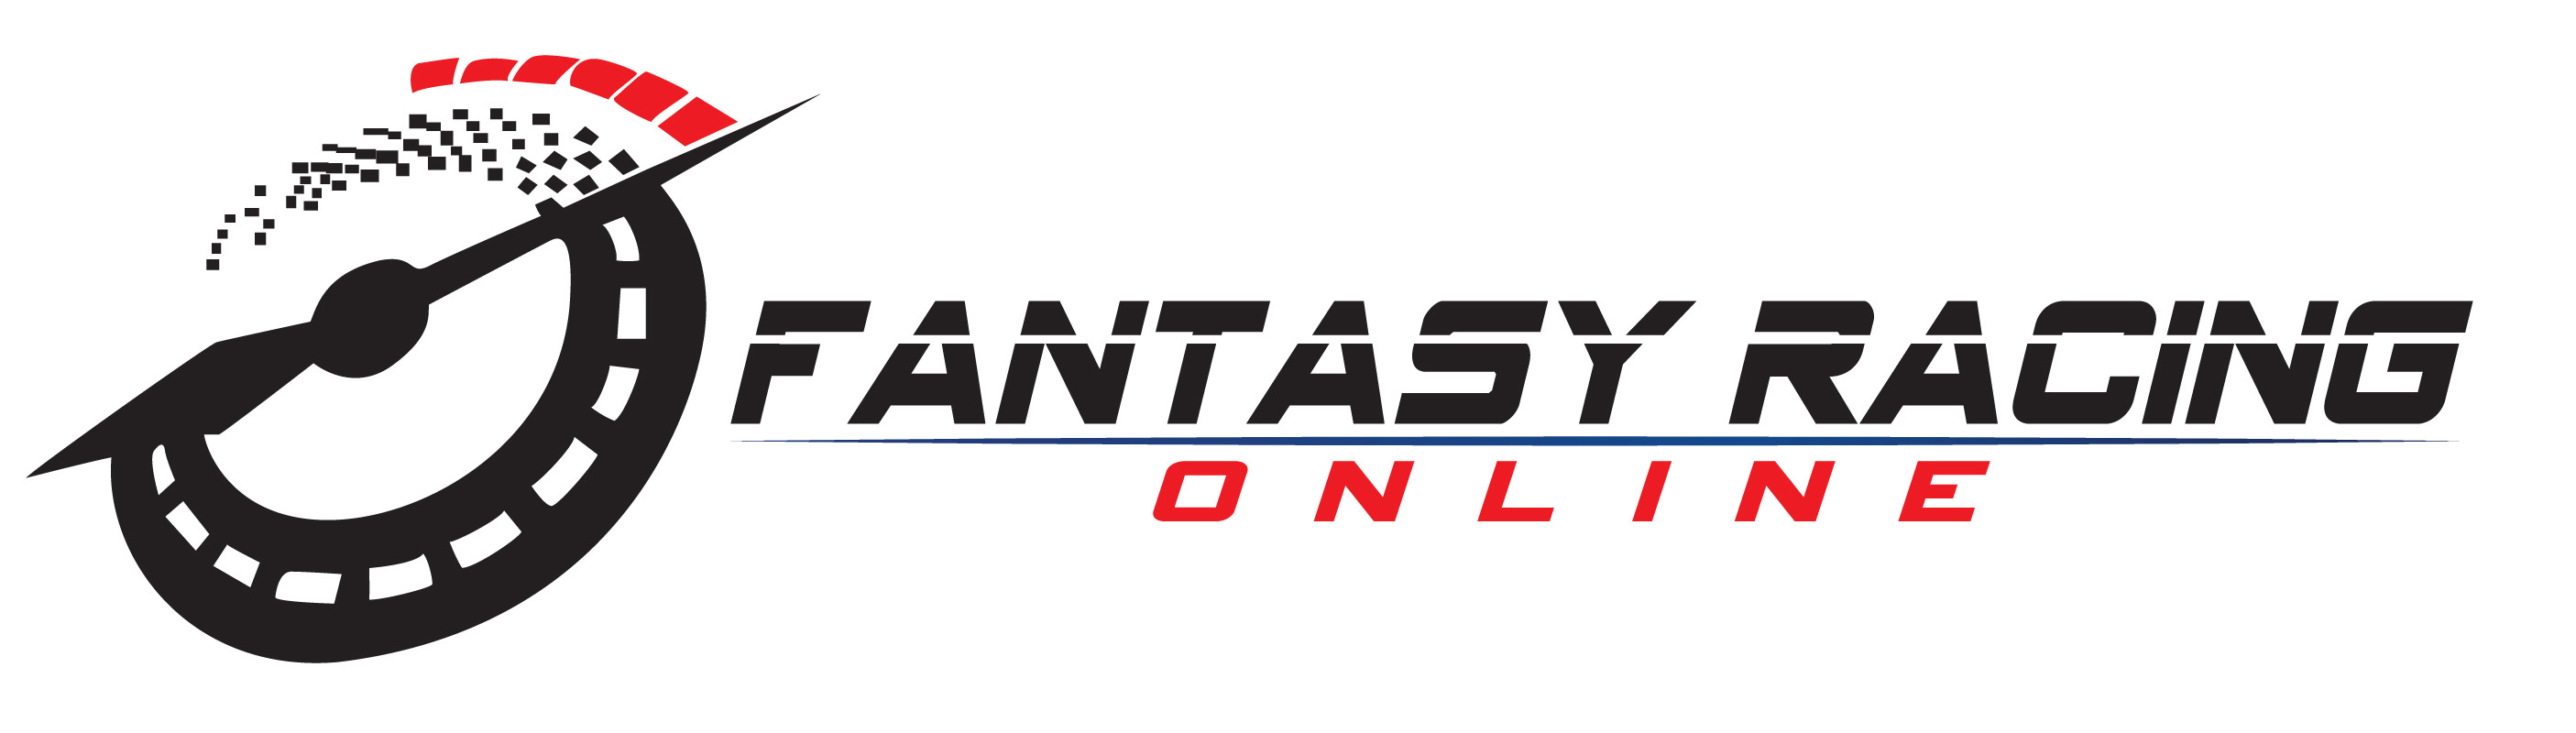 Slingshot Fantasy Auto Contest Leaderboard » Fantasy Racing Online